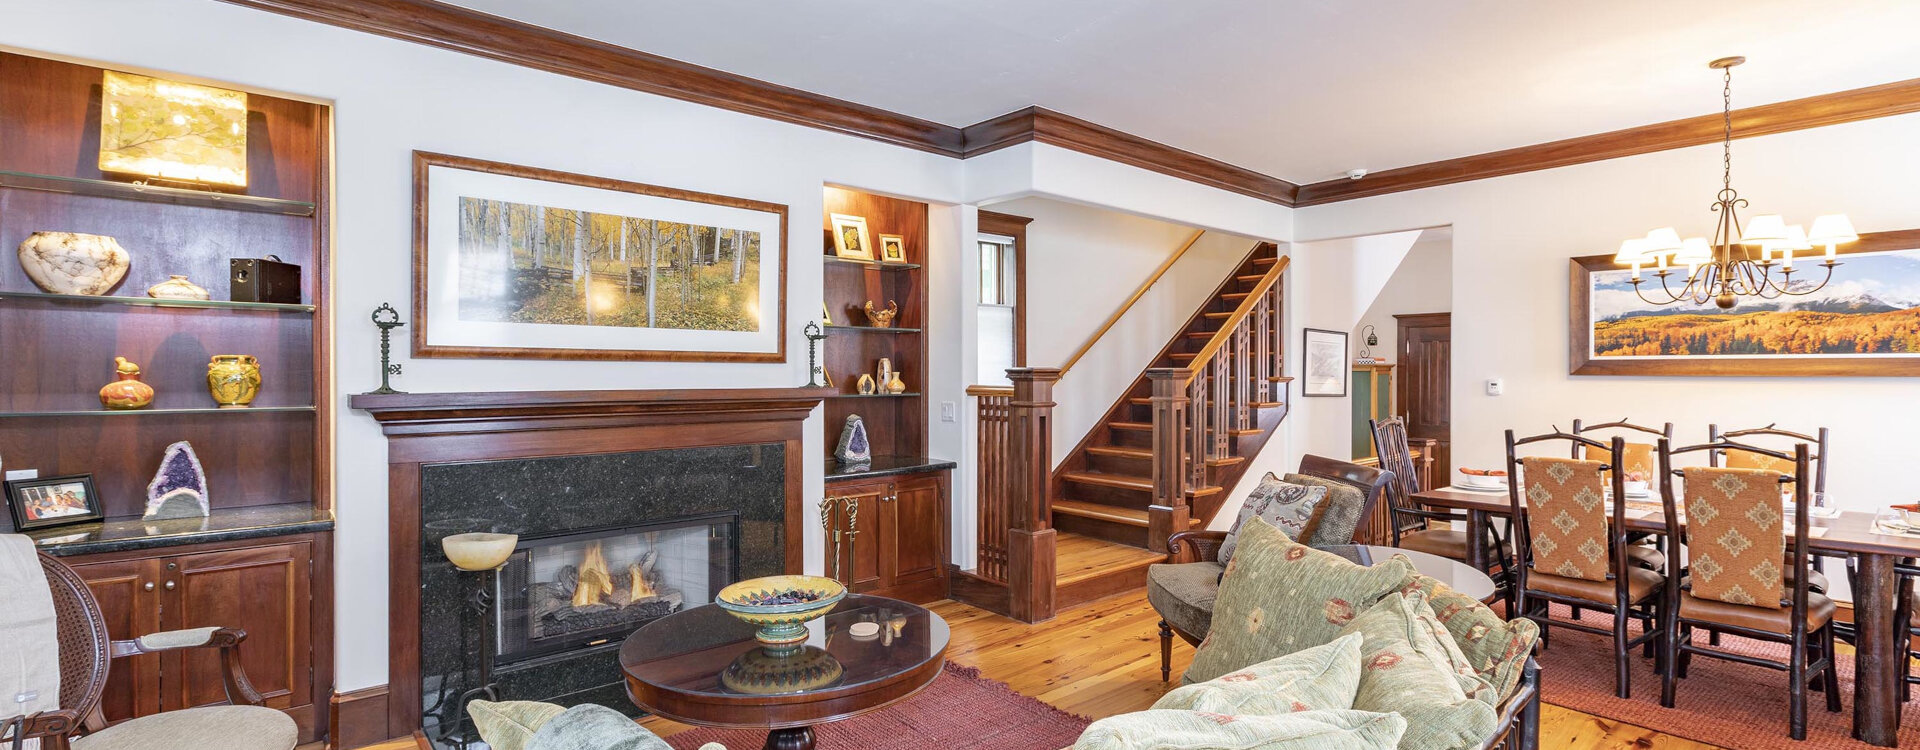 1.2-telluride-heritage-house-living-room-fireplace